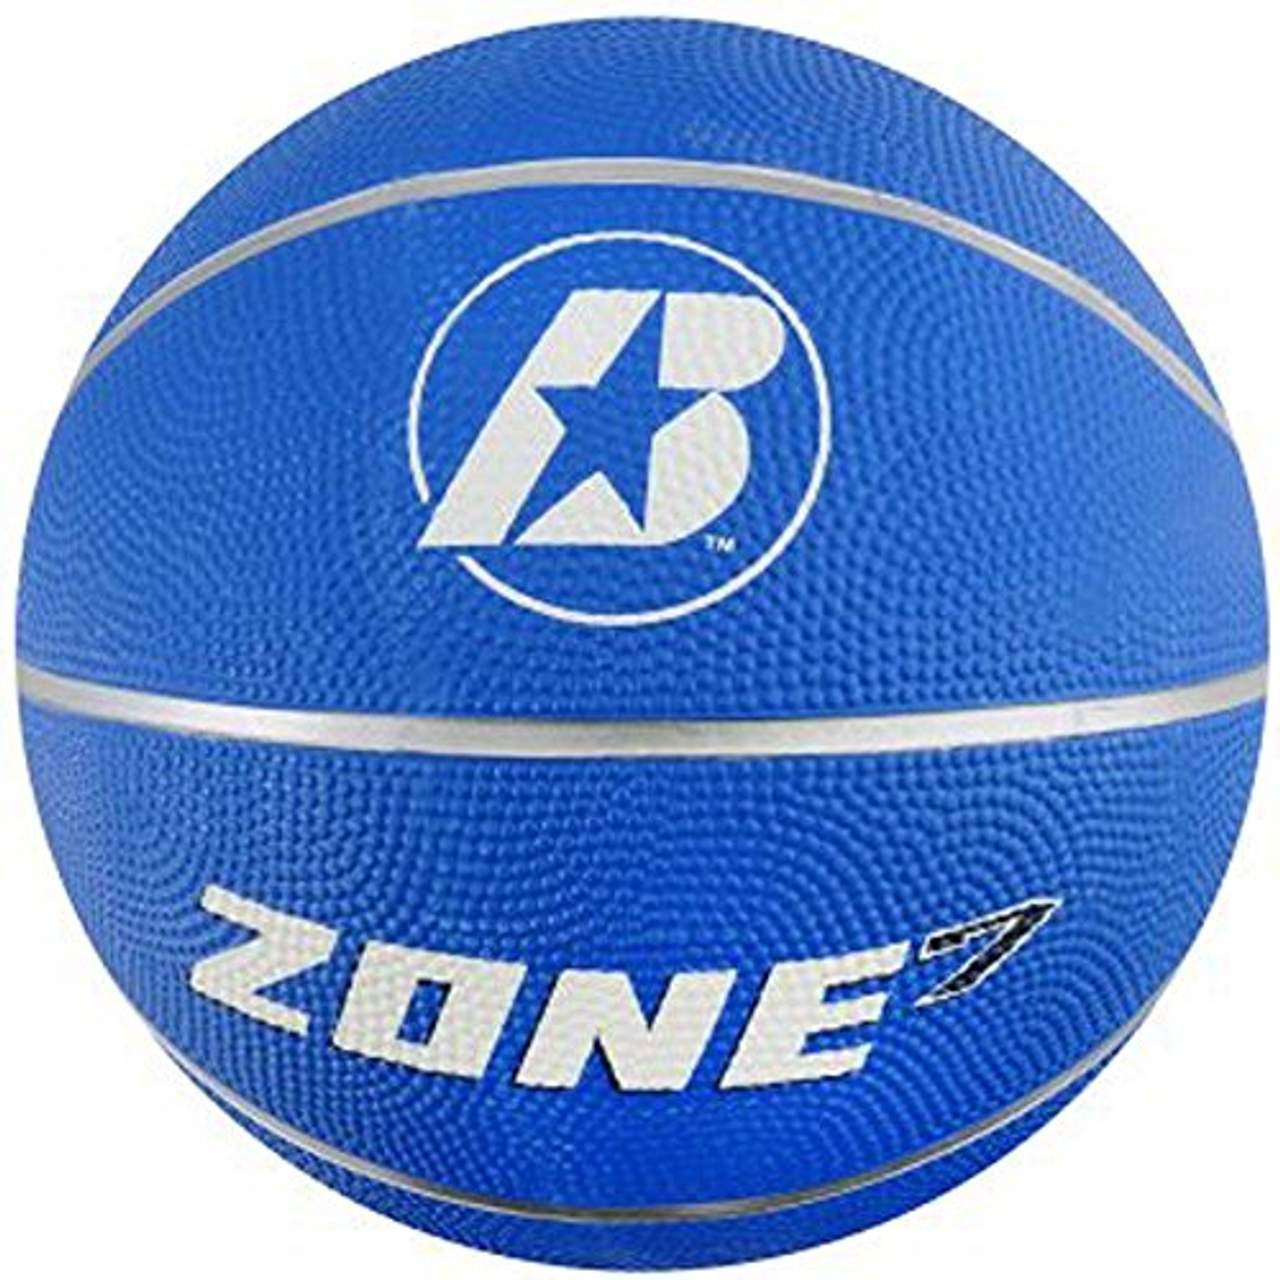 Baden Unisex Basketball Zone 7